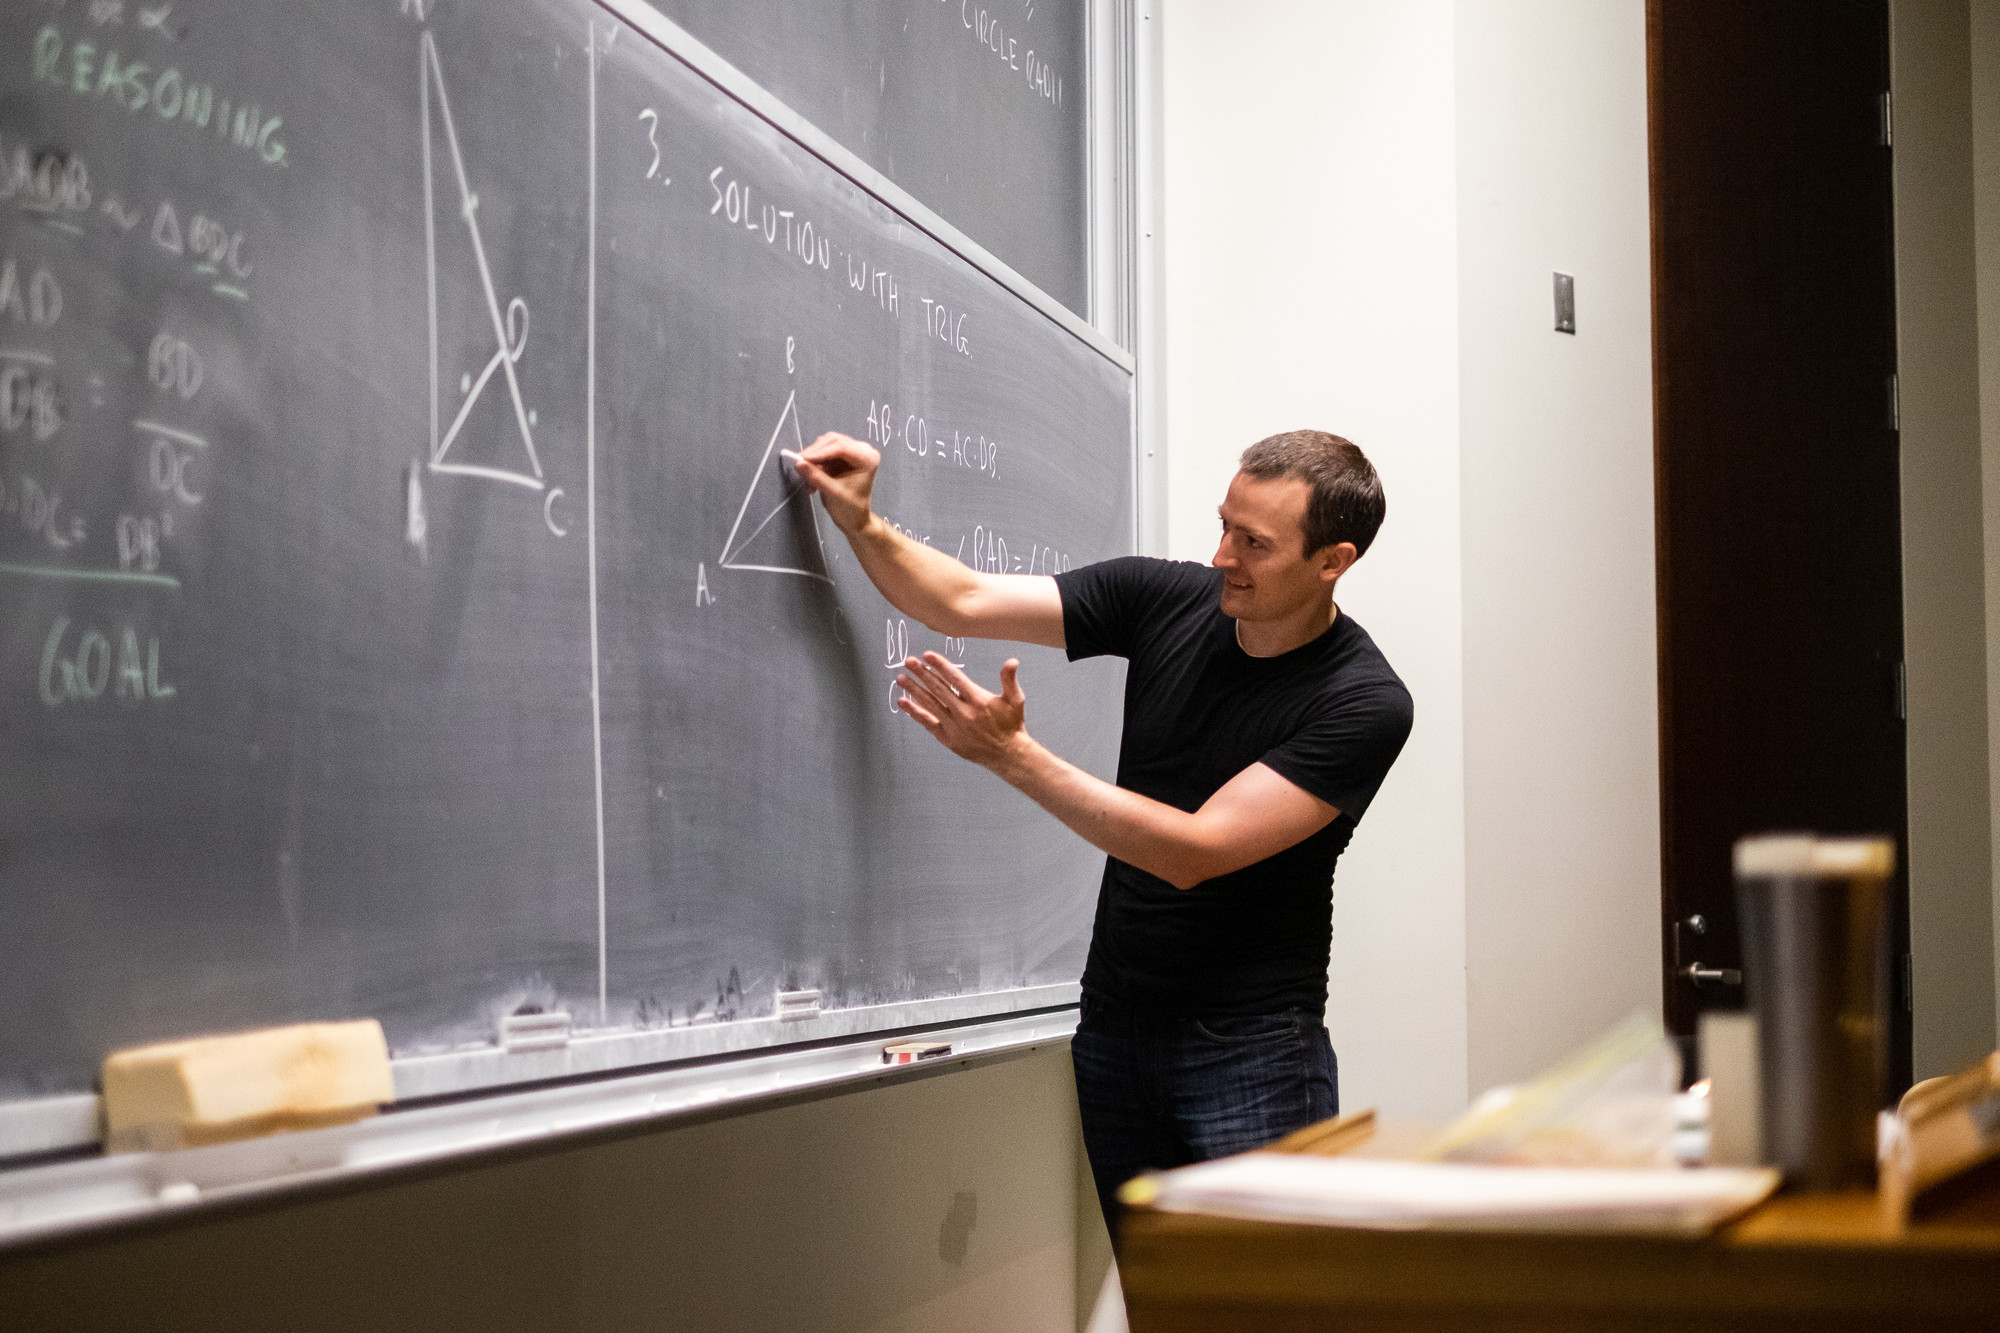 Post-doc Zack Wolske draws math problems on the blackboard at the Bahen Centre